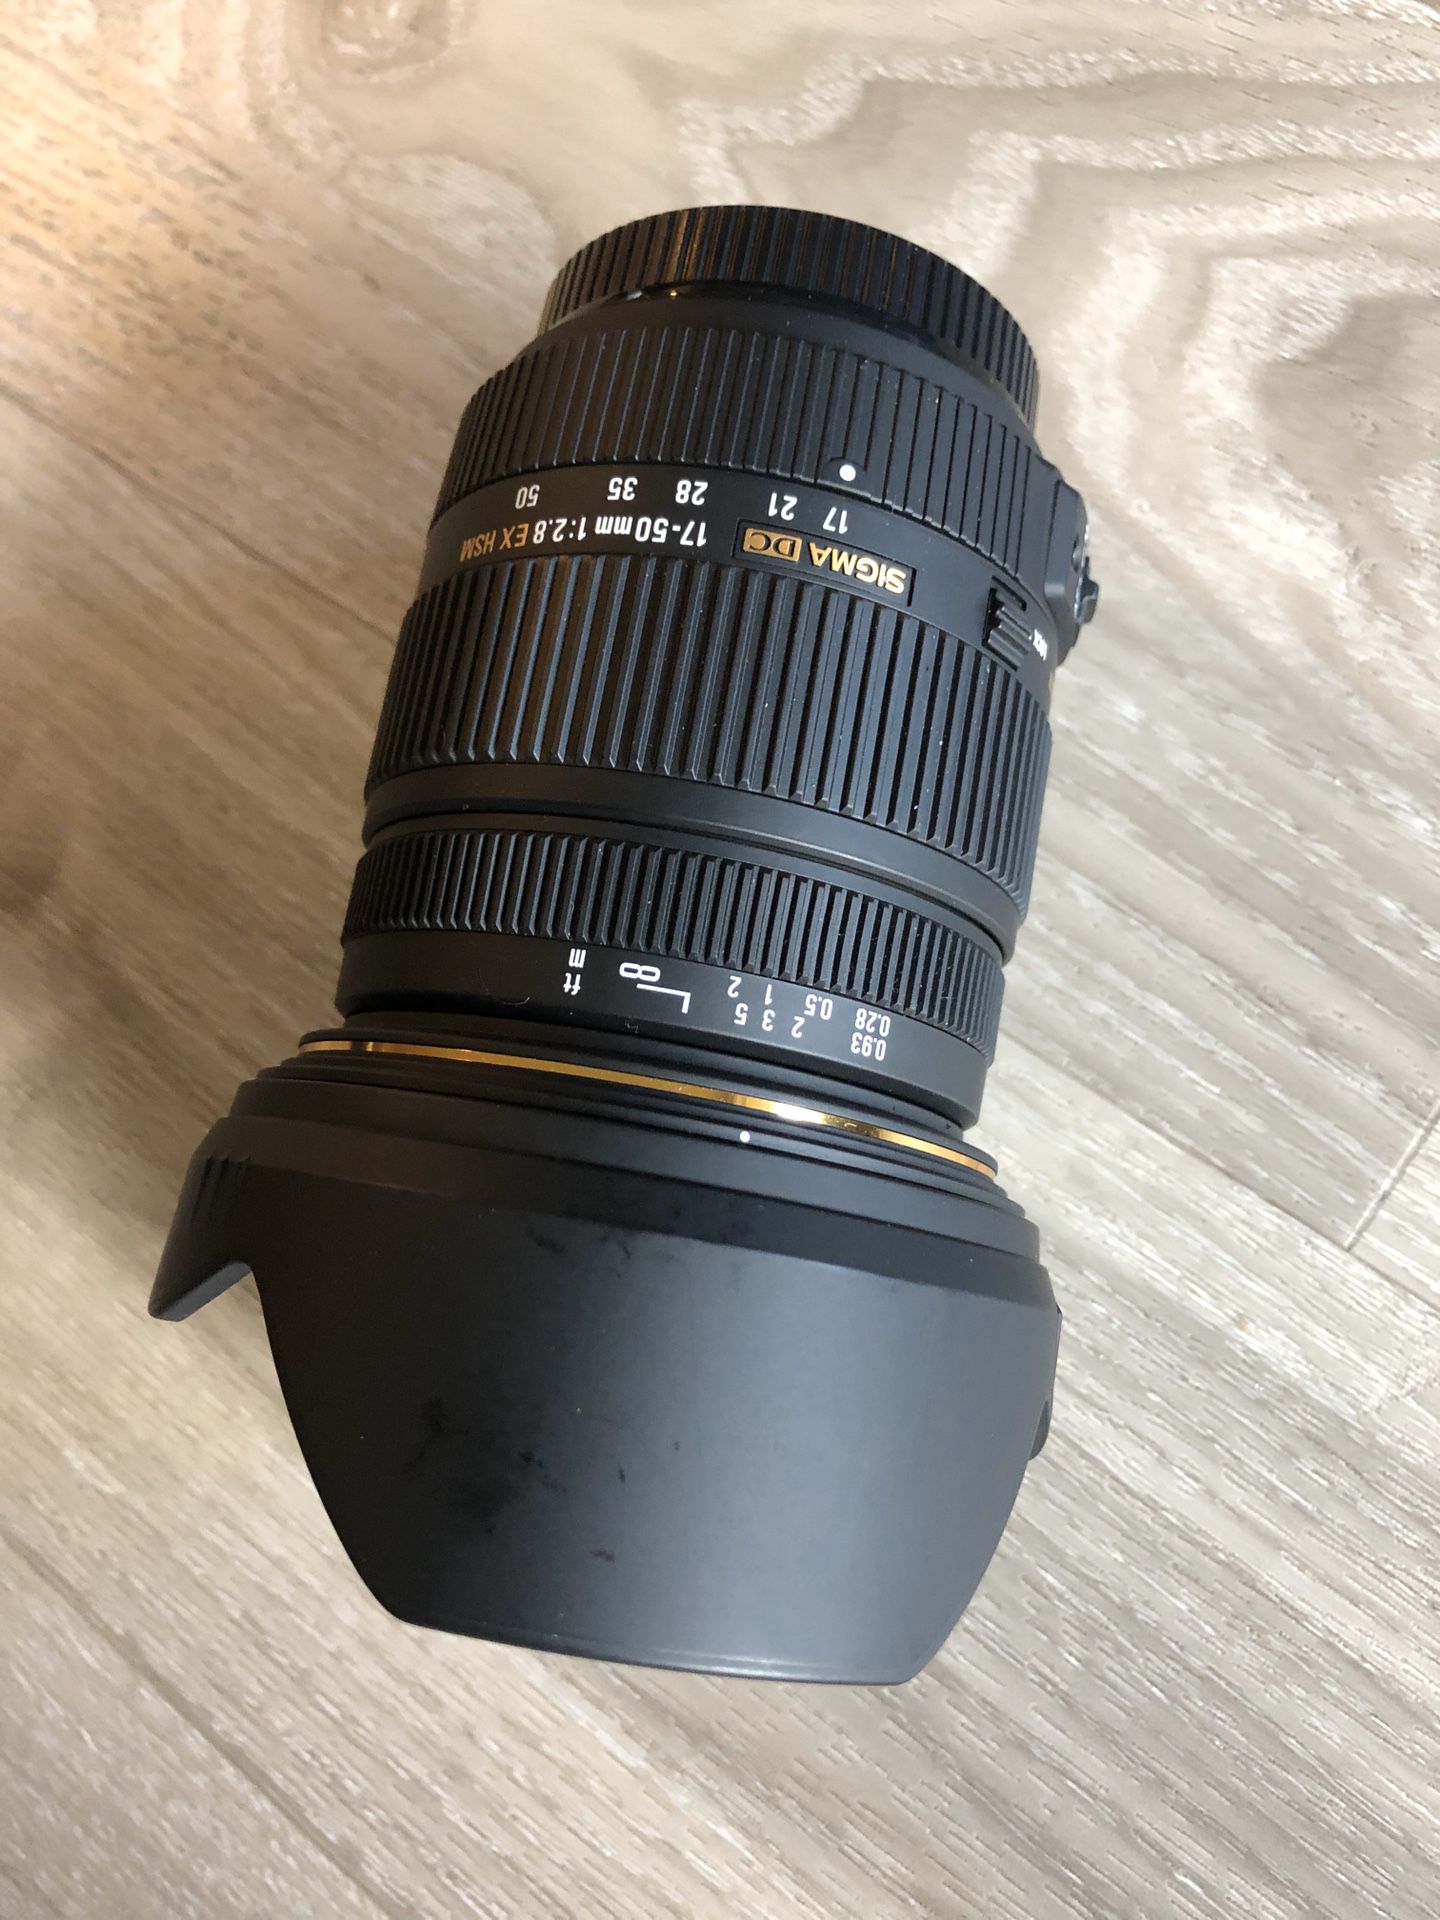 Sigma 7-50mm f/2.8 EX HSM Sony A mount lens